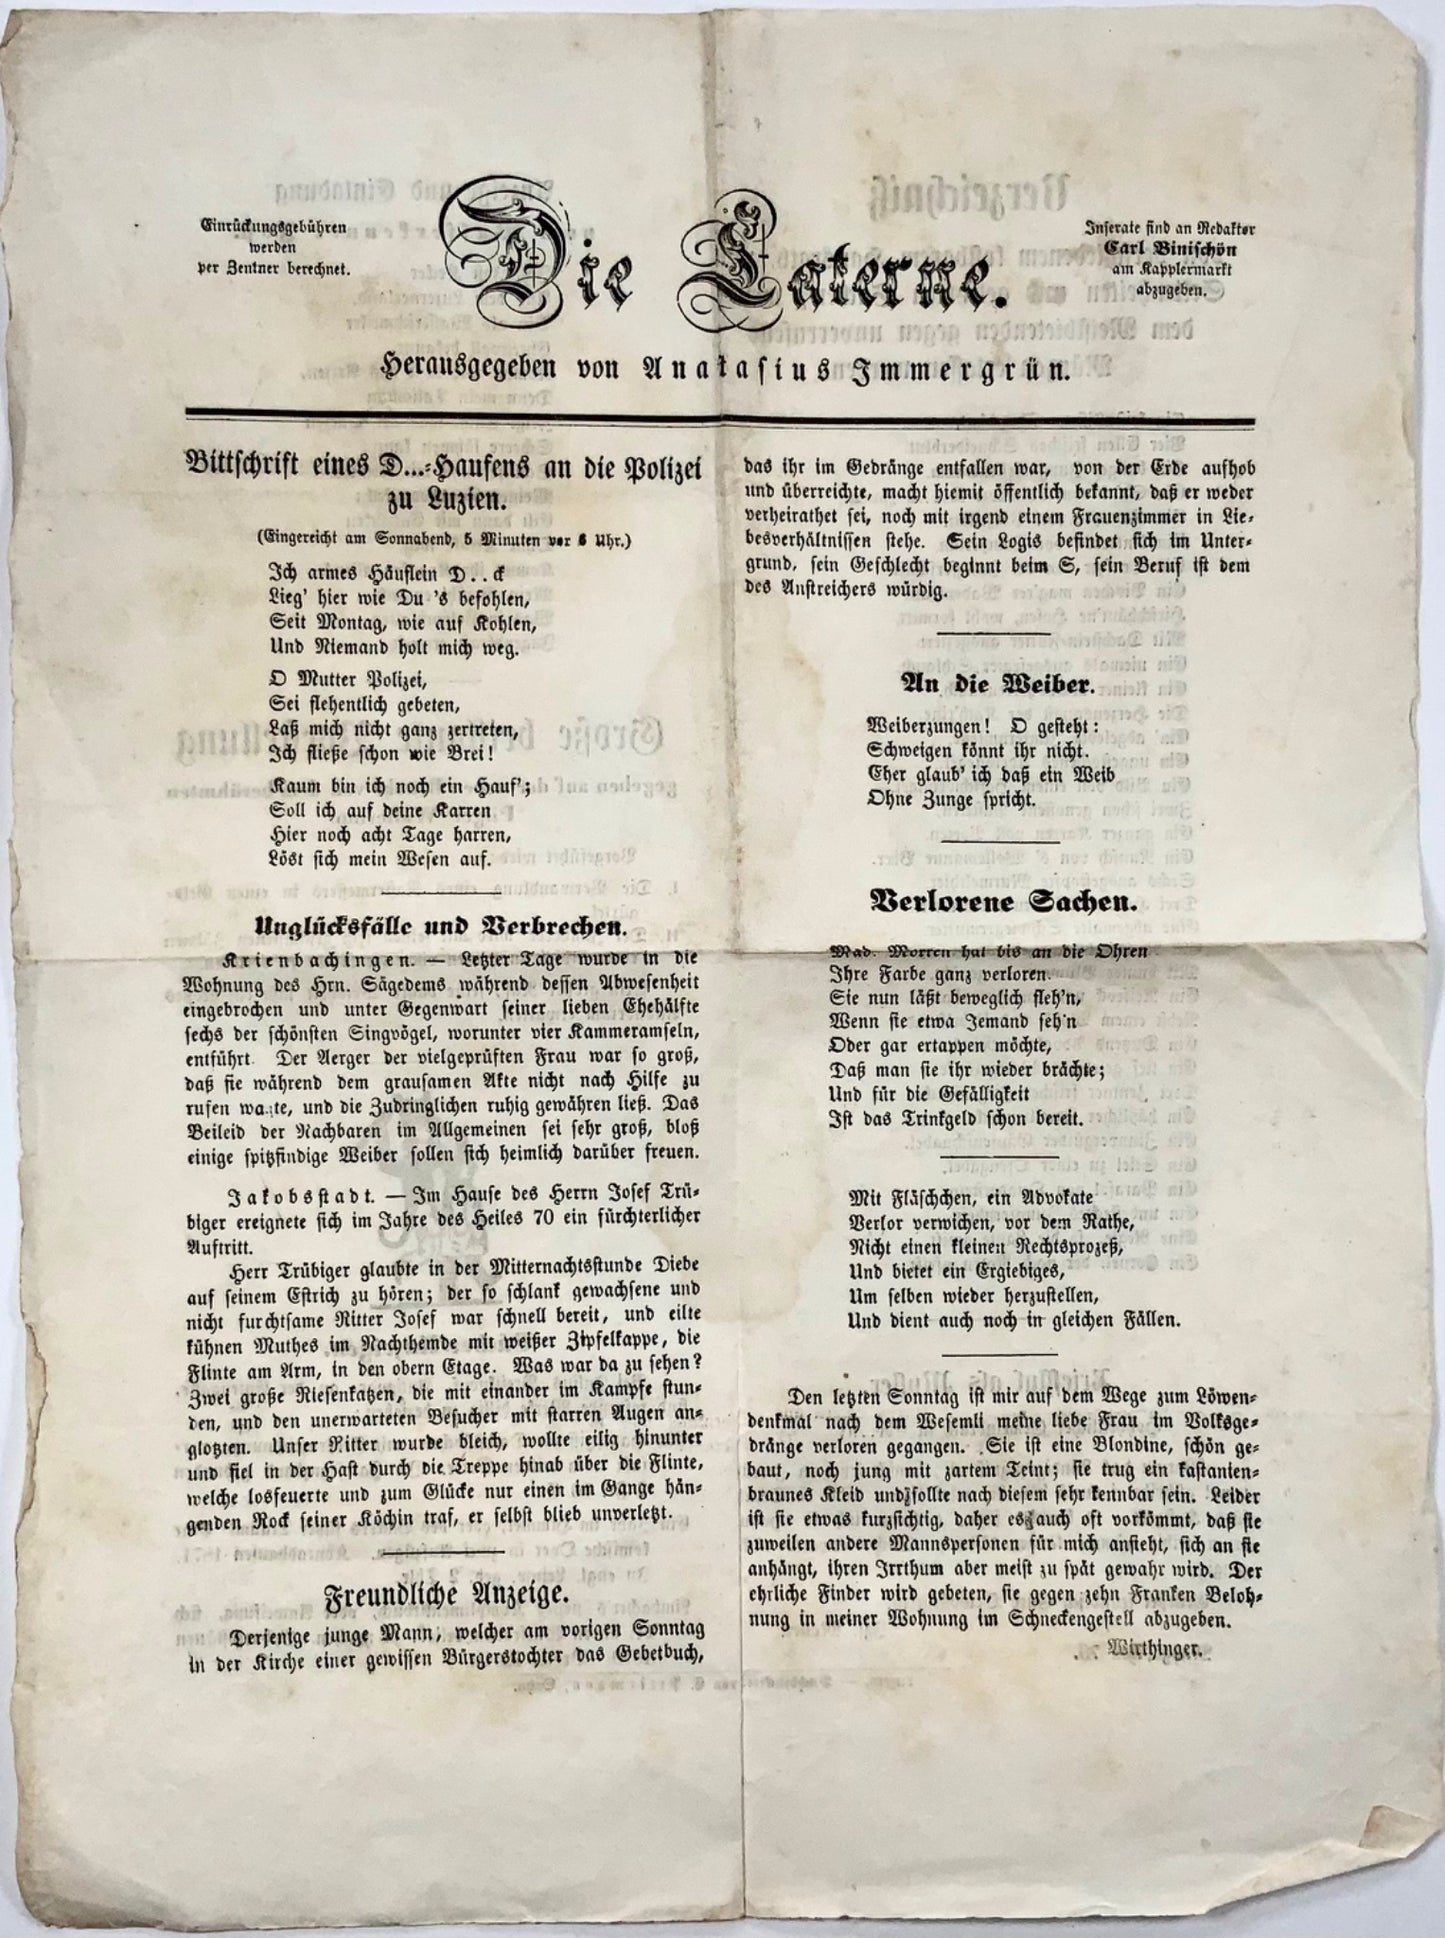 1871 Carnival newspaper ‘Die Laterne”, Lucerne, Switzerland